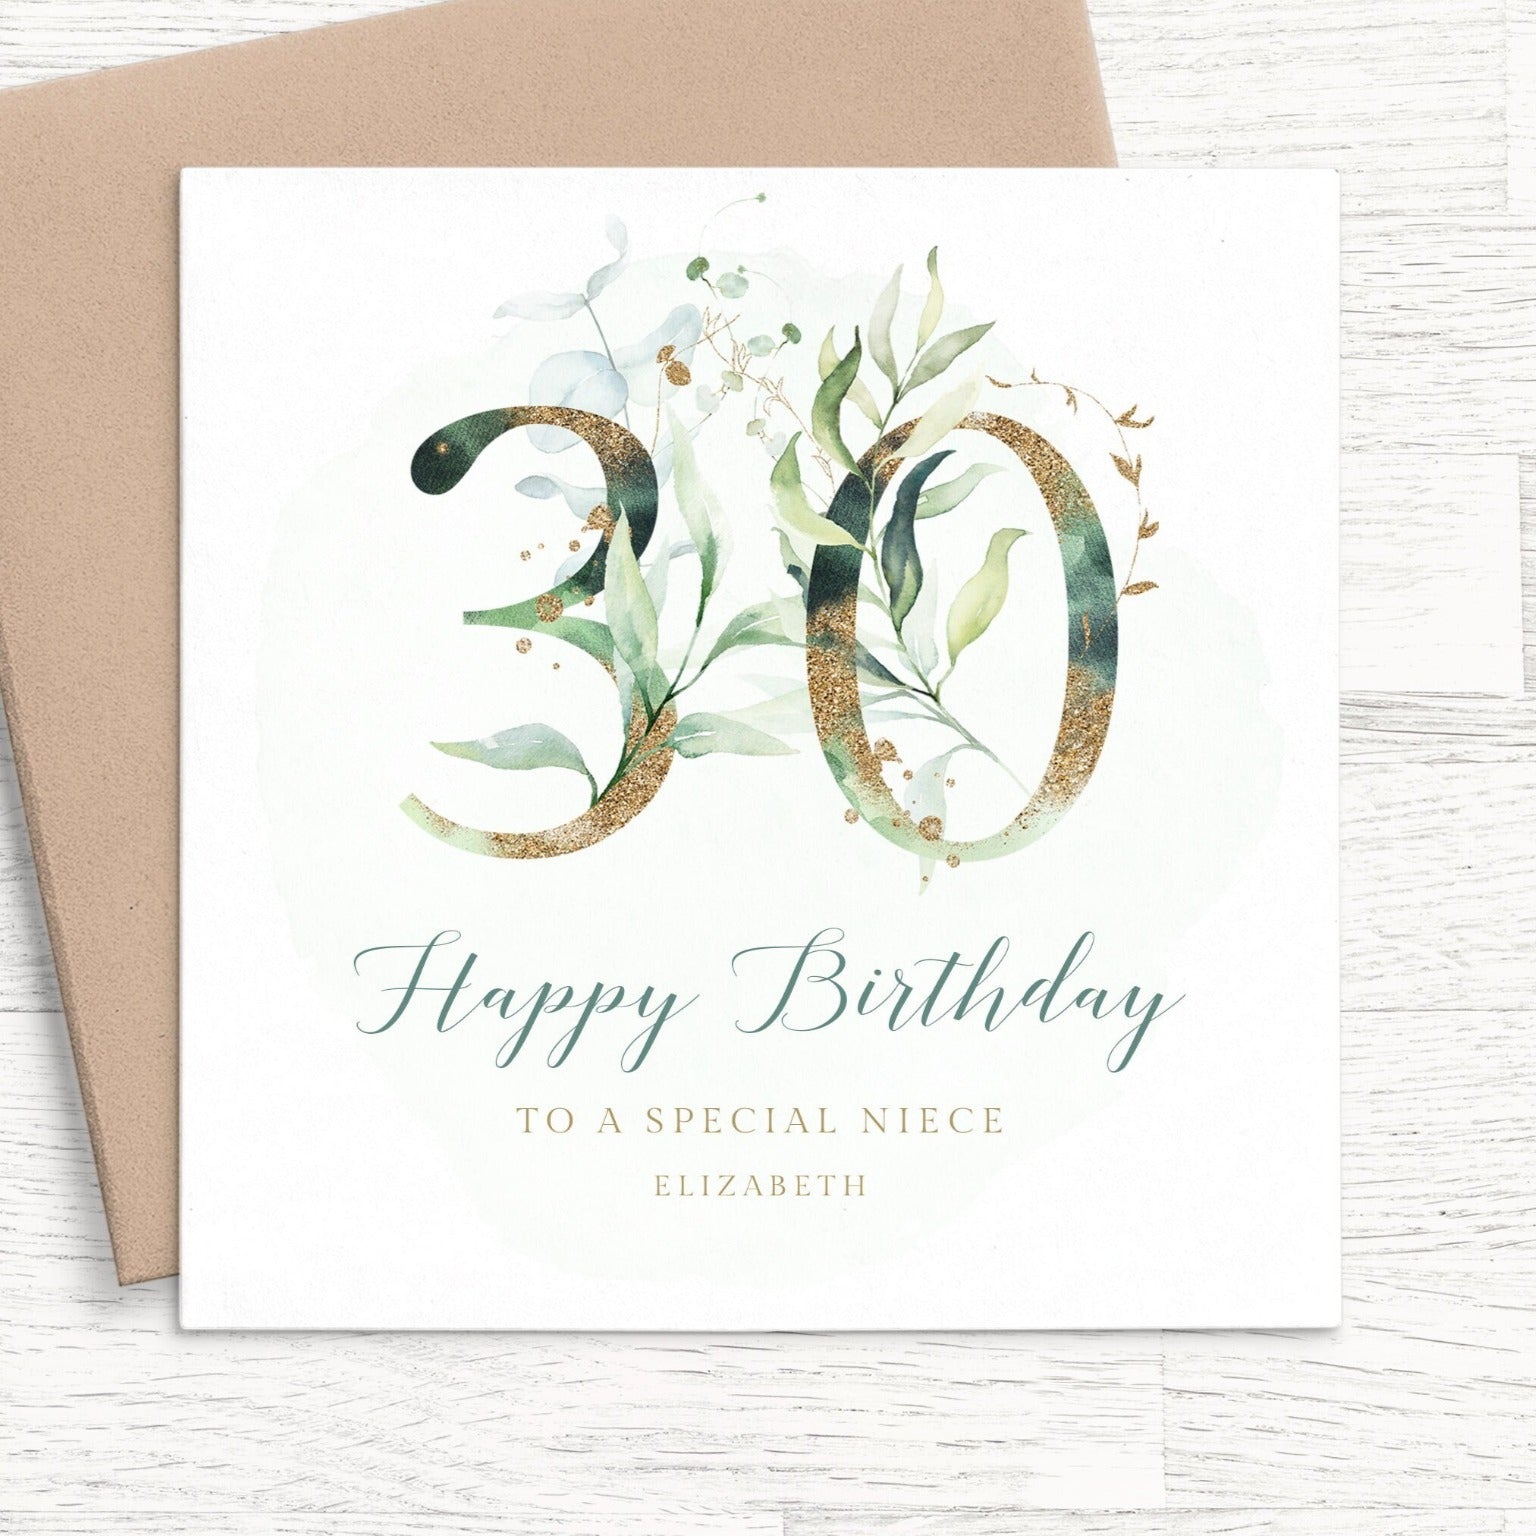 niece eucalyptus 30th birthday card personalised smooth matte white cardstock kraft brown envelope